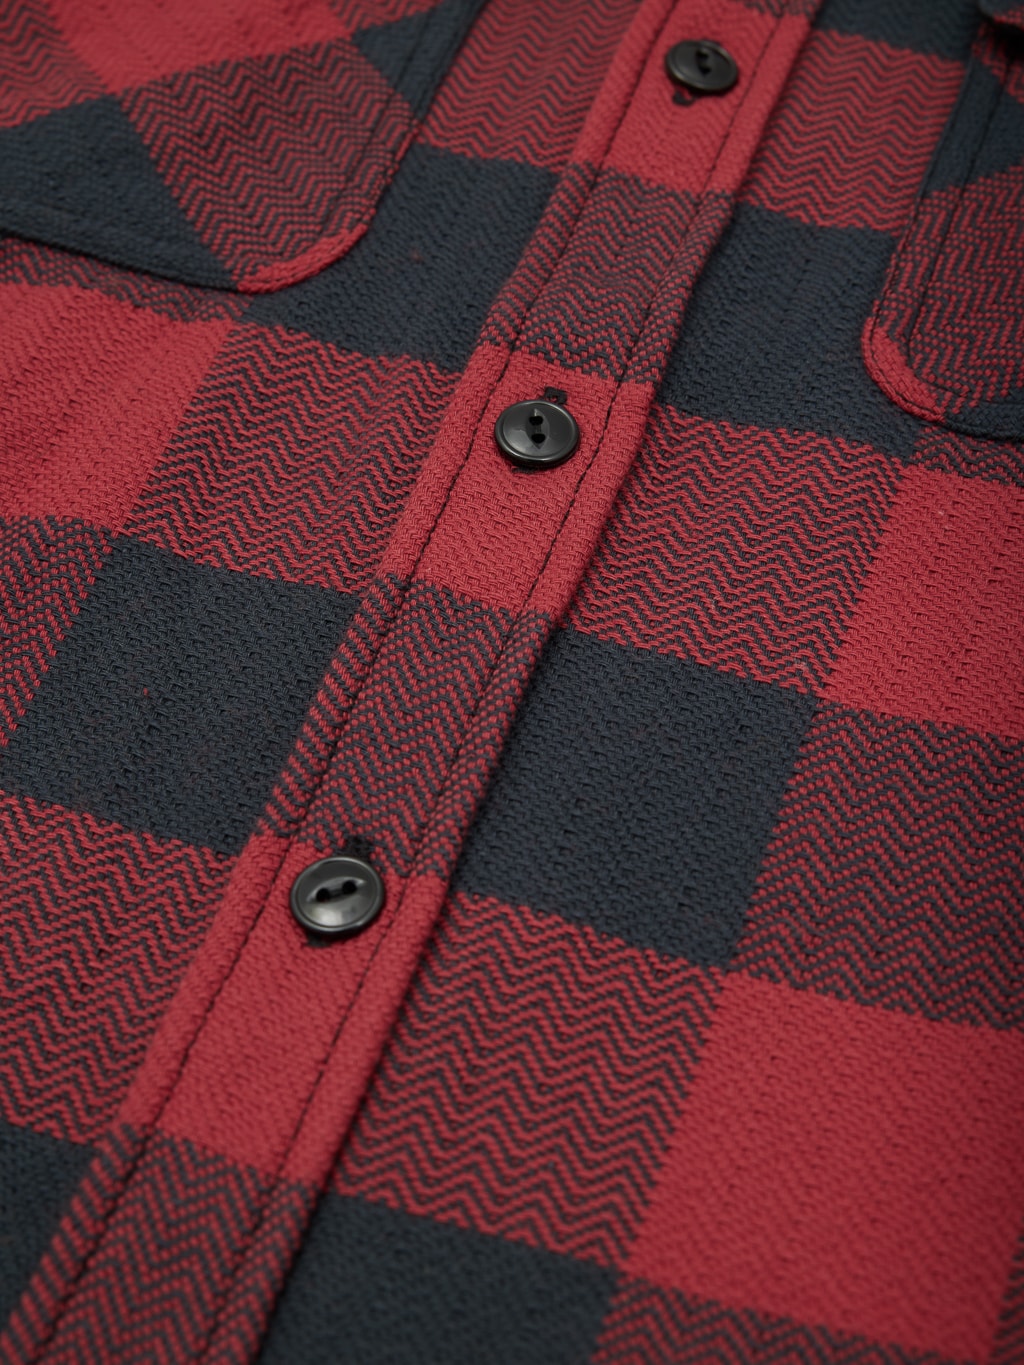 the flat head block check flannel shirt black red  buttons closeup